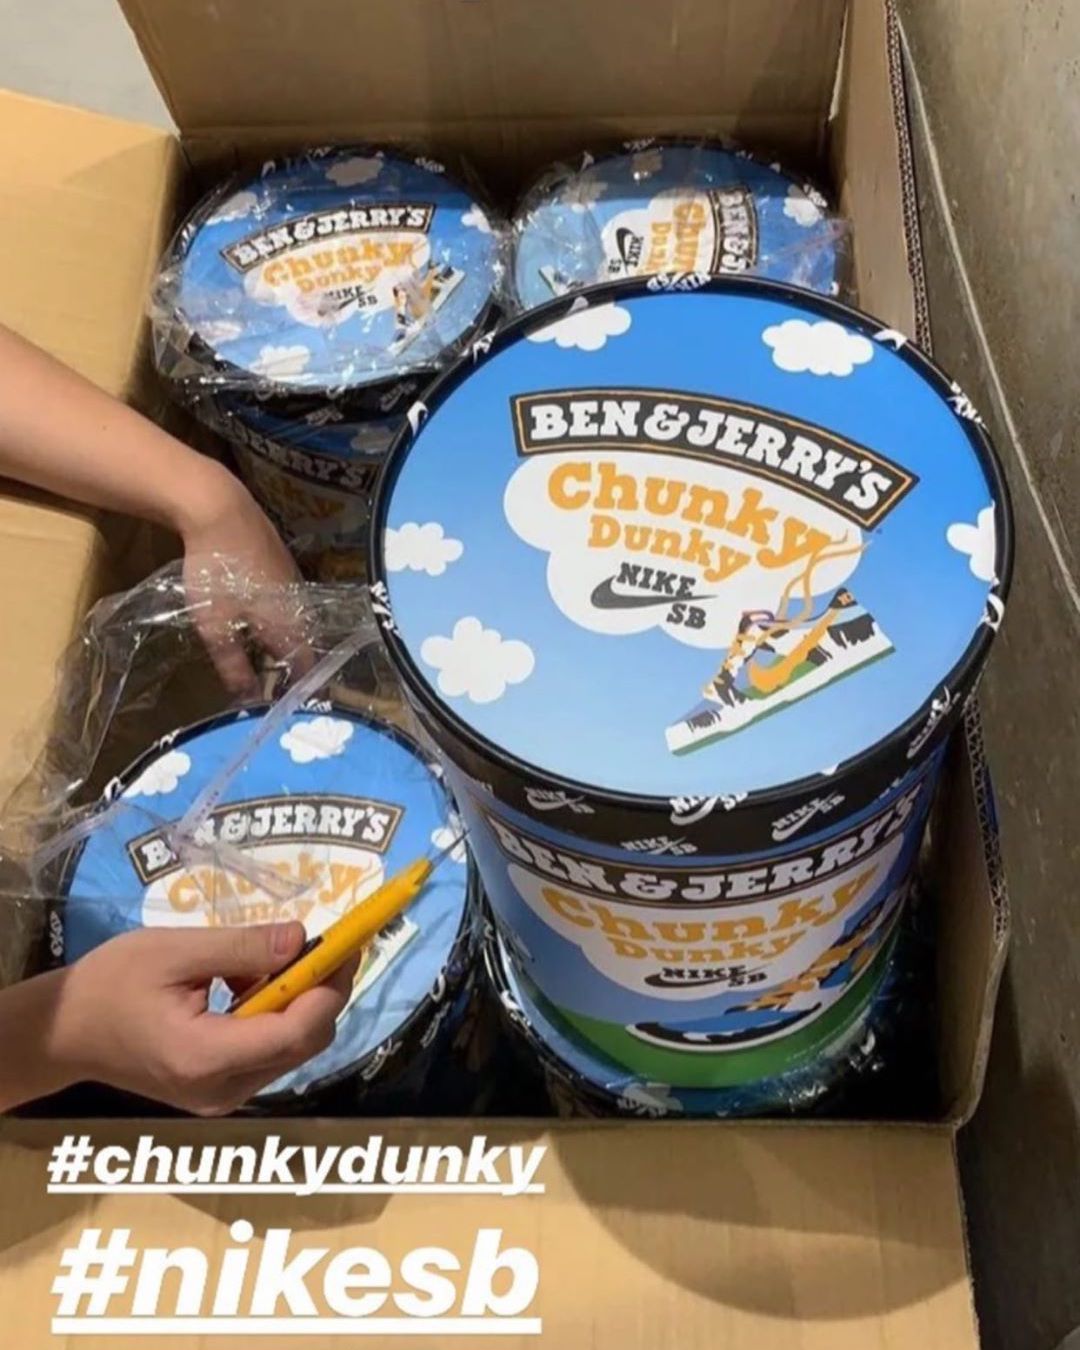 nike sb chunky dunky special box